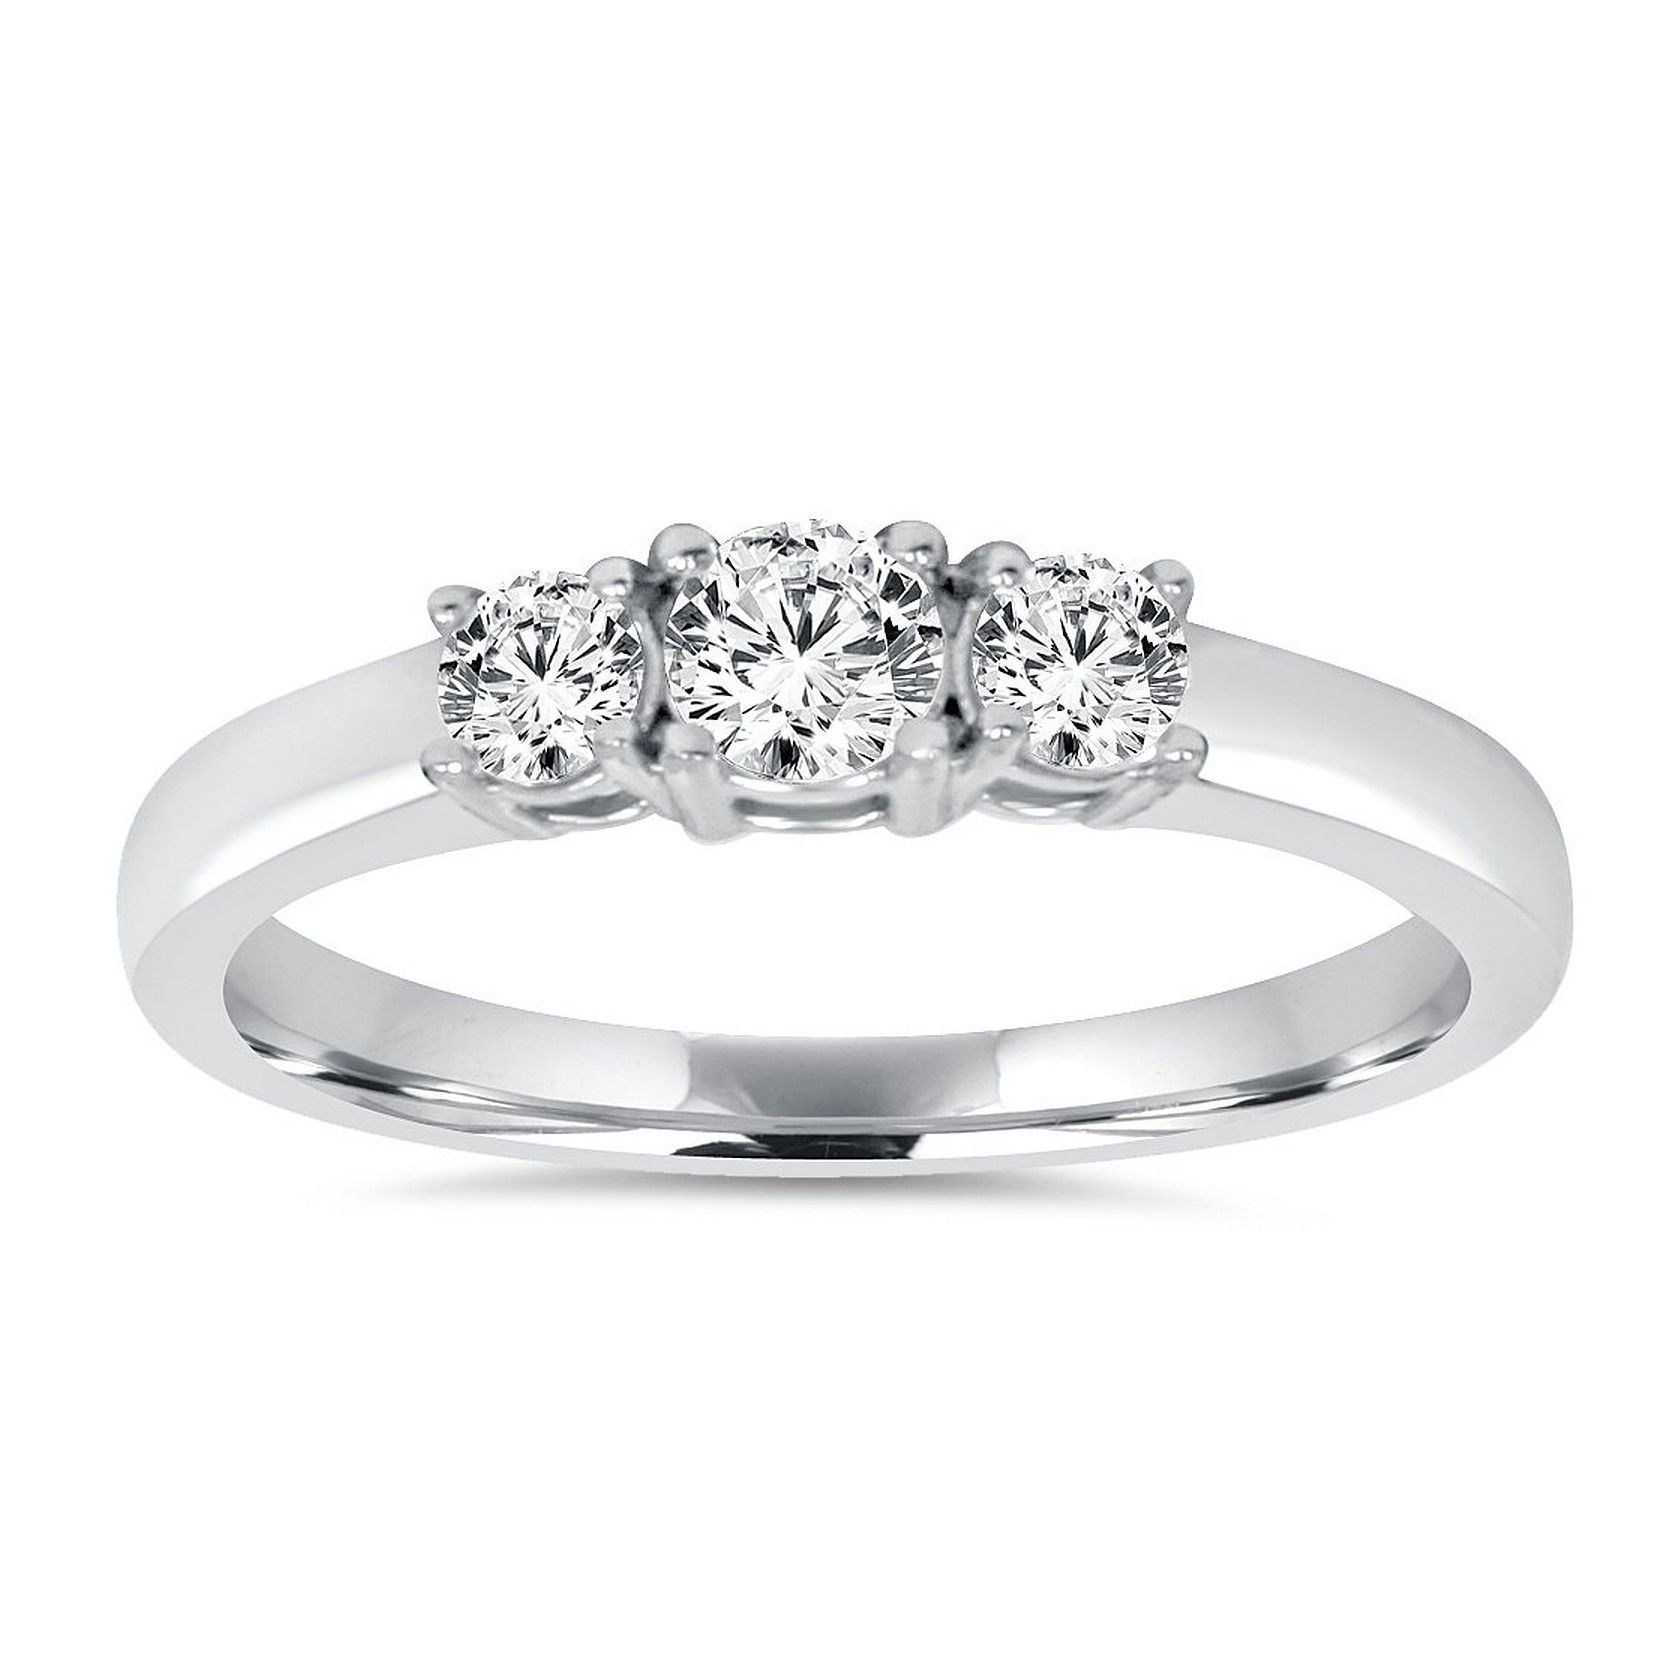 14k White Gold 3 Stone Round Cut Diamond Engagement Ring  (View 11 of 25)